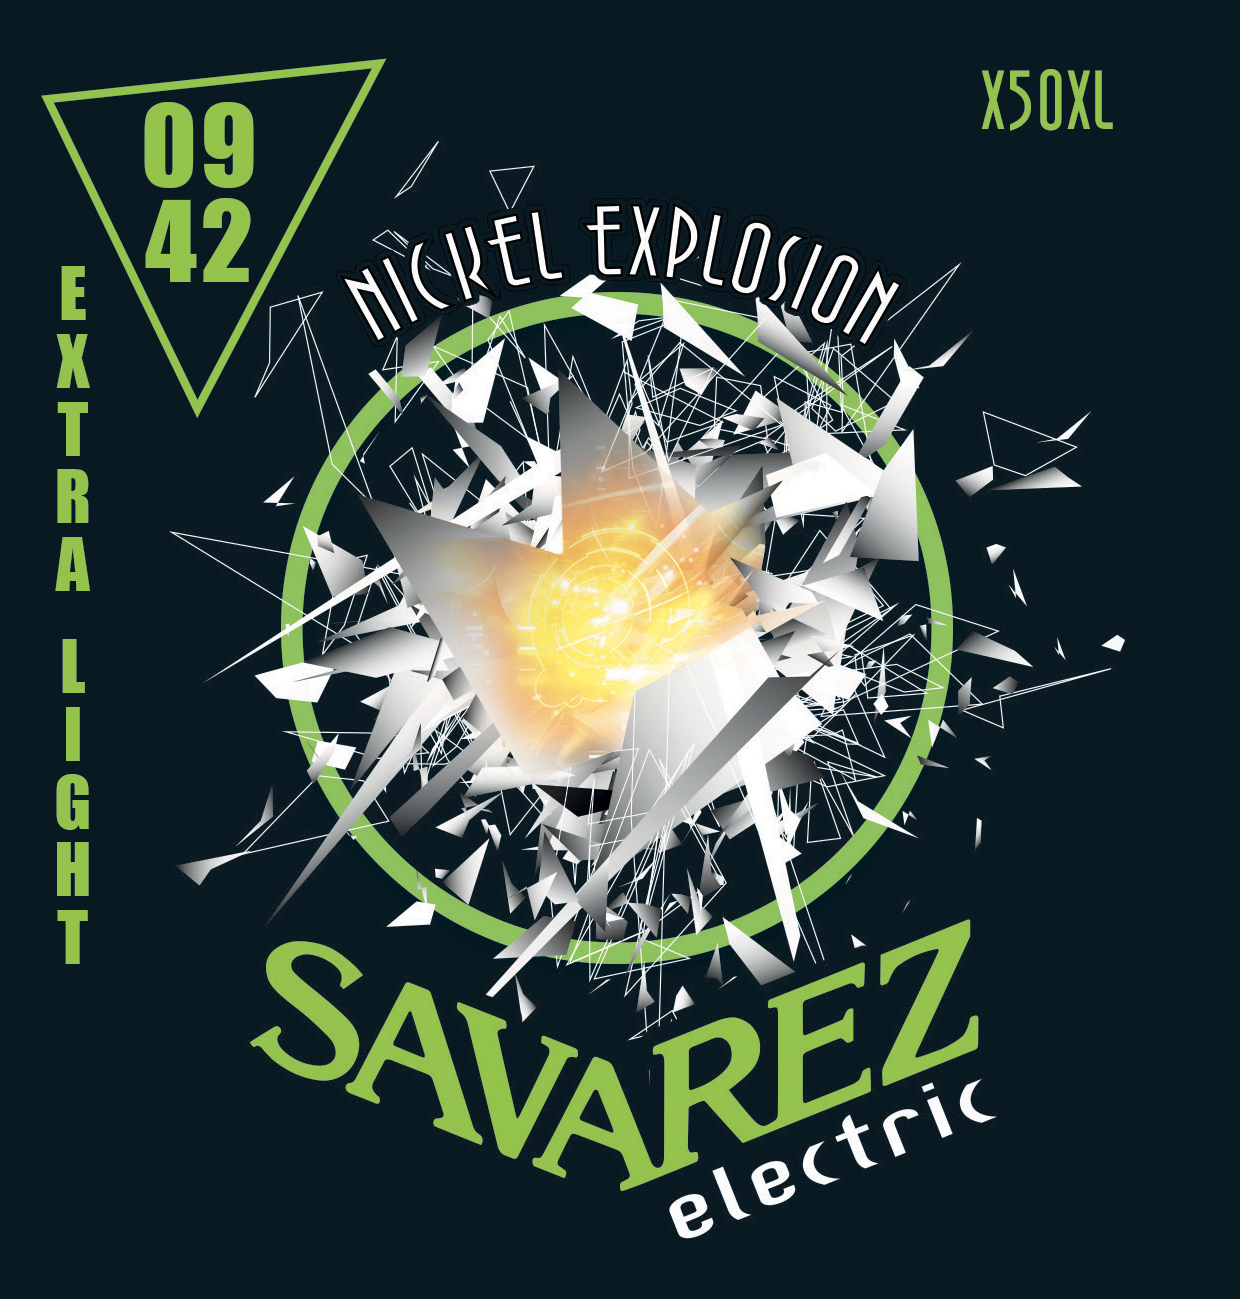 SAVAREZ ELECTRIC NICKEL EXPLOSION X50XL